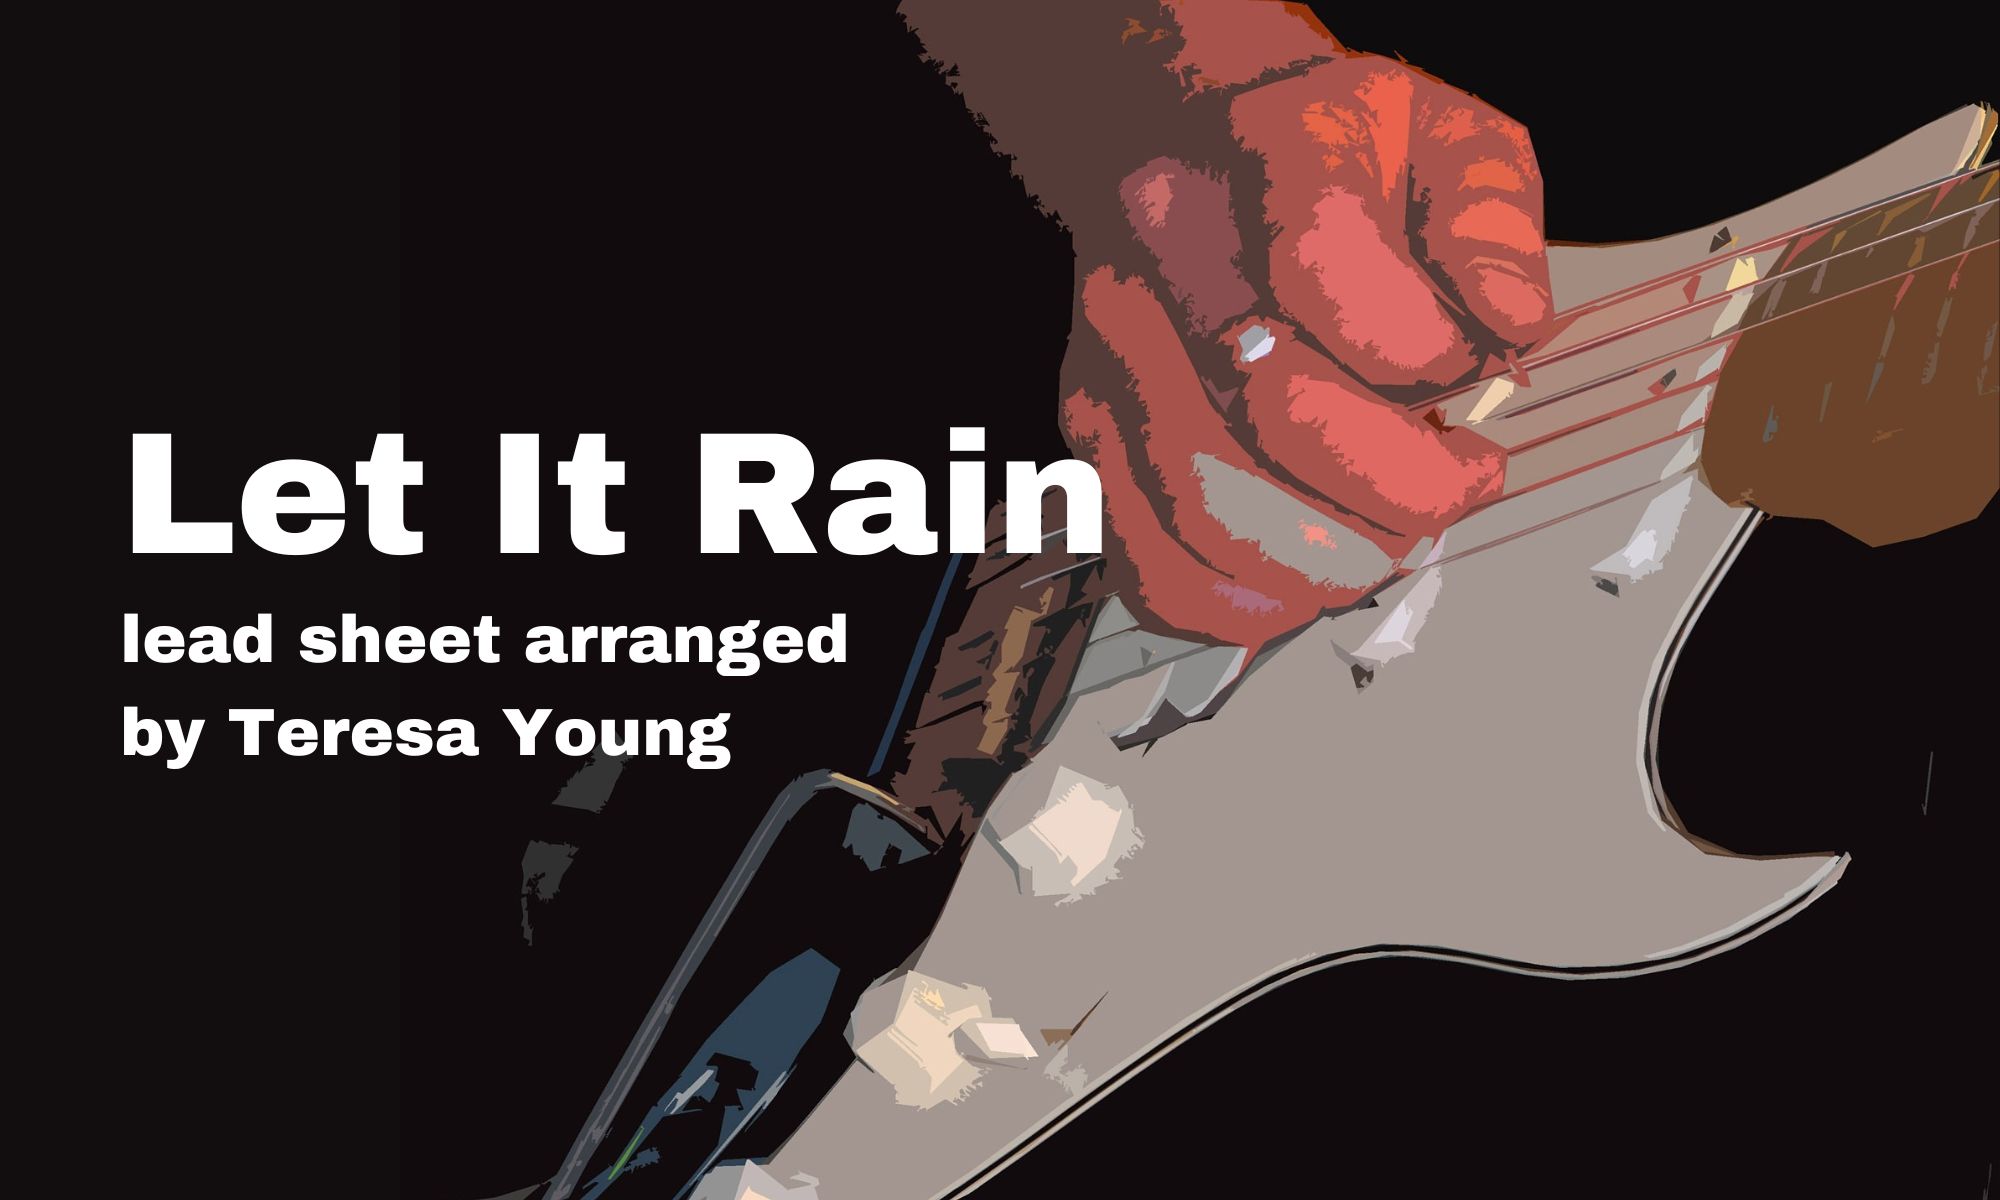 Let It Rain lead sheet arranged by Teresa Young